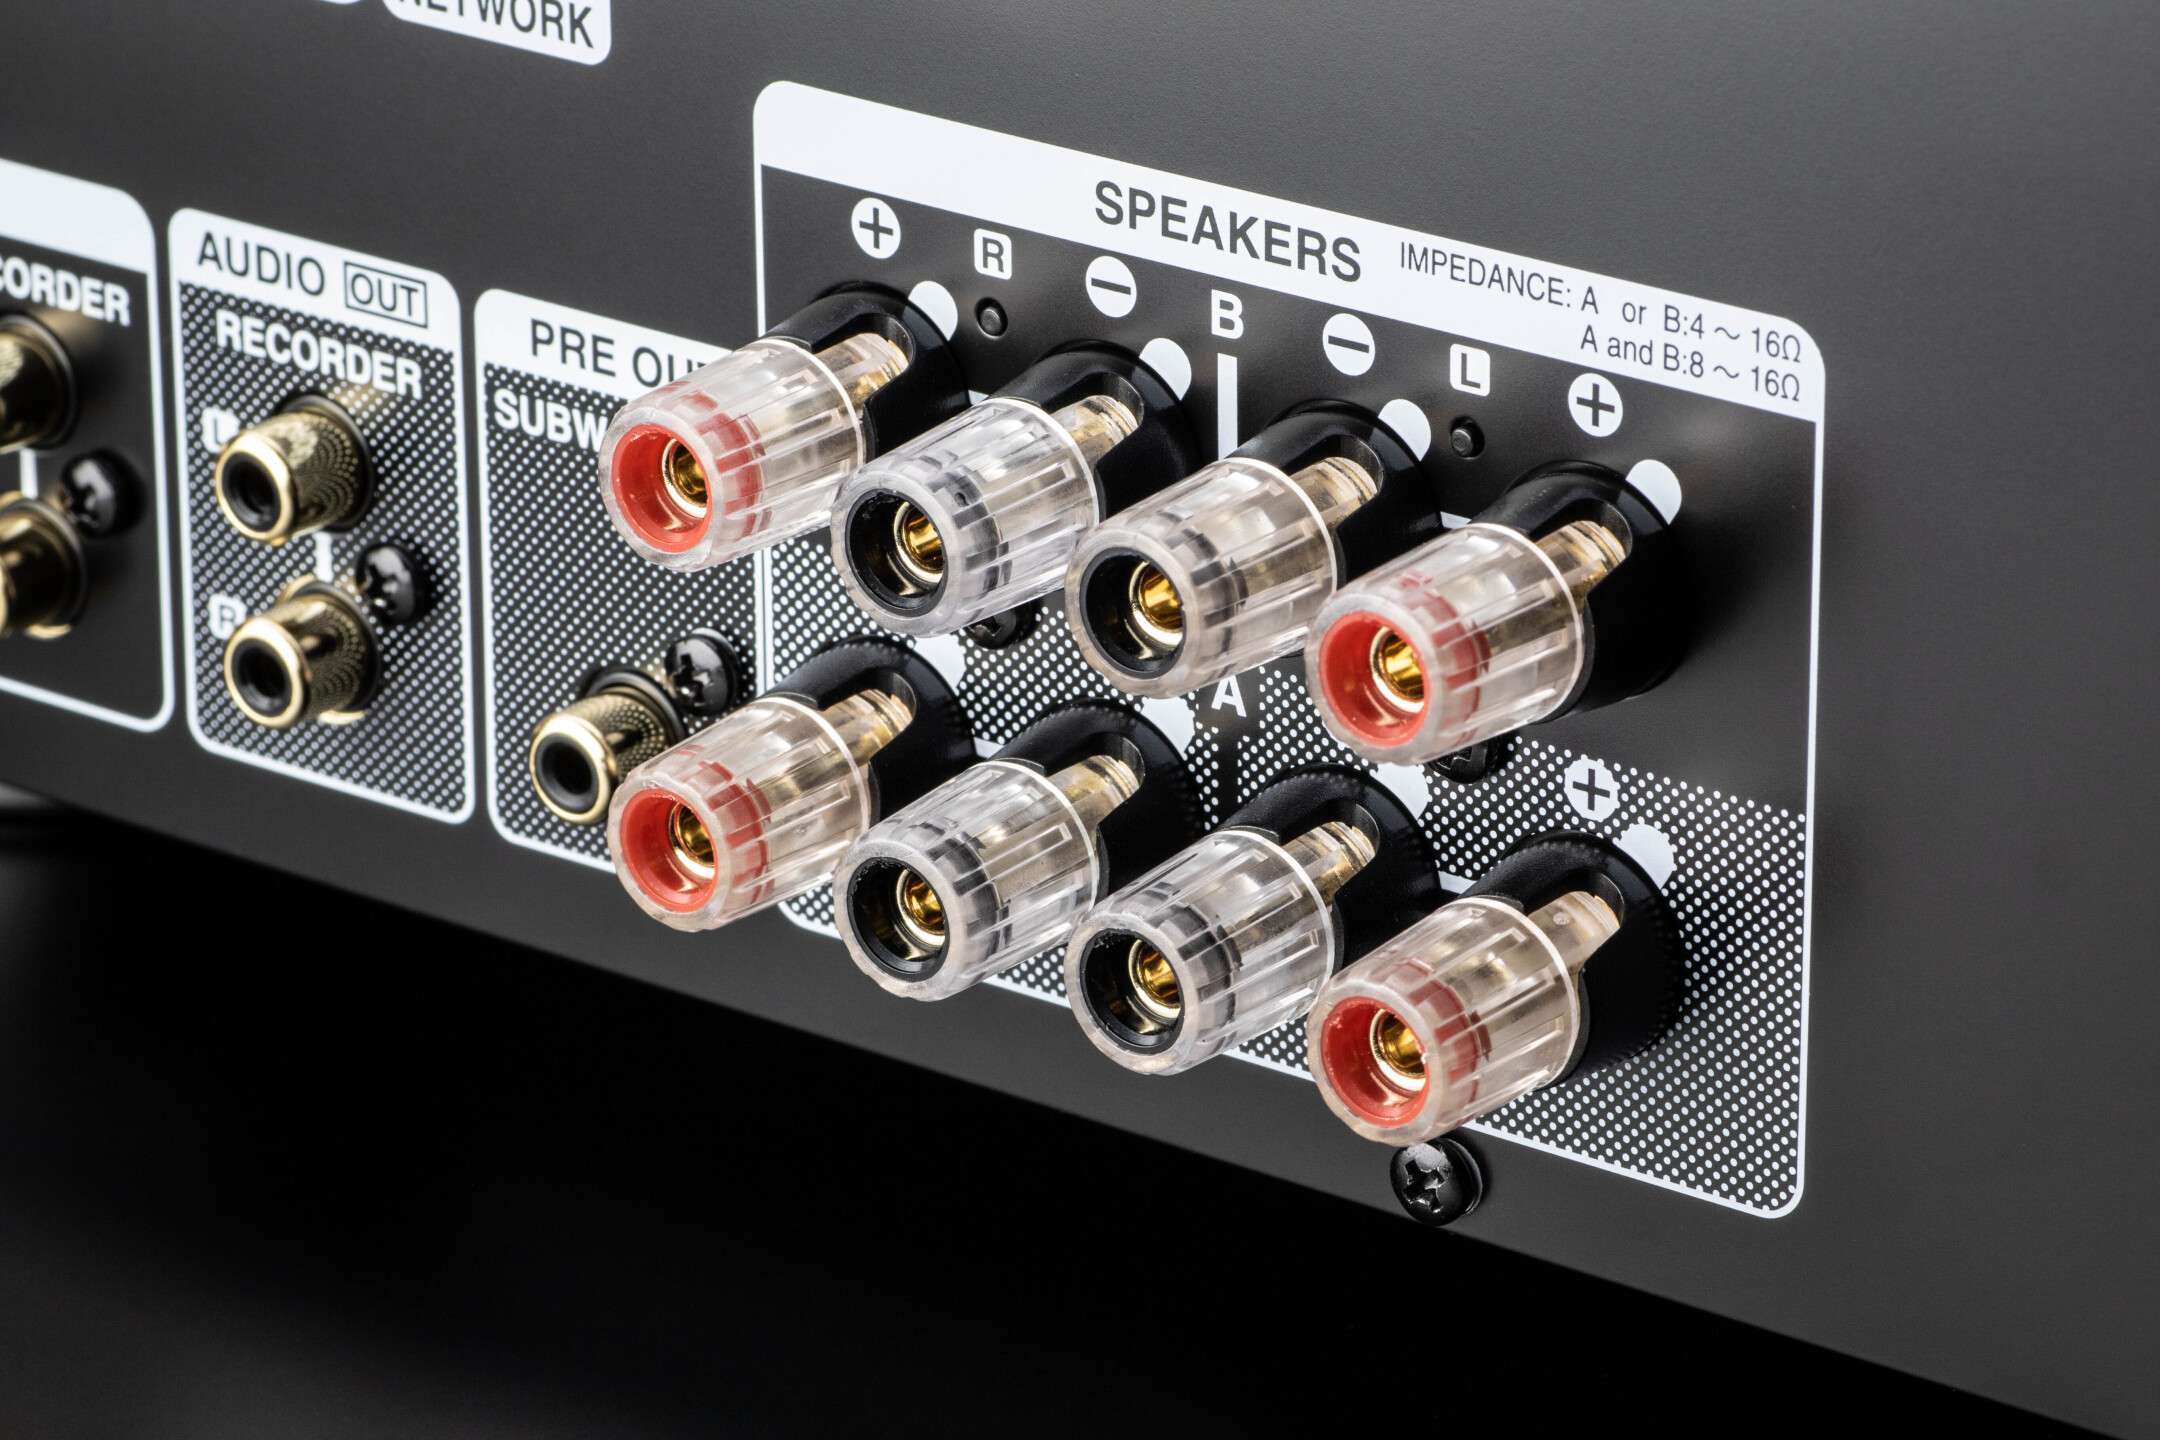 Denon-PMA-900HNE-Netzwerk-Stereo-Vollverstarker-HD-Audiostreaming-HEOS-Built-in-Silber